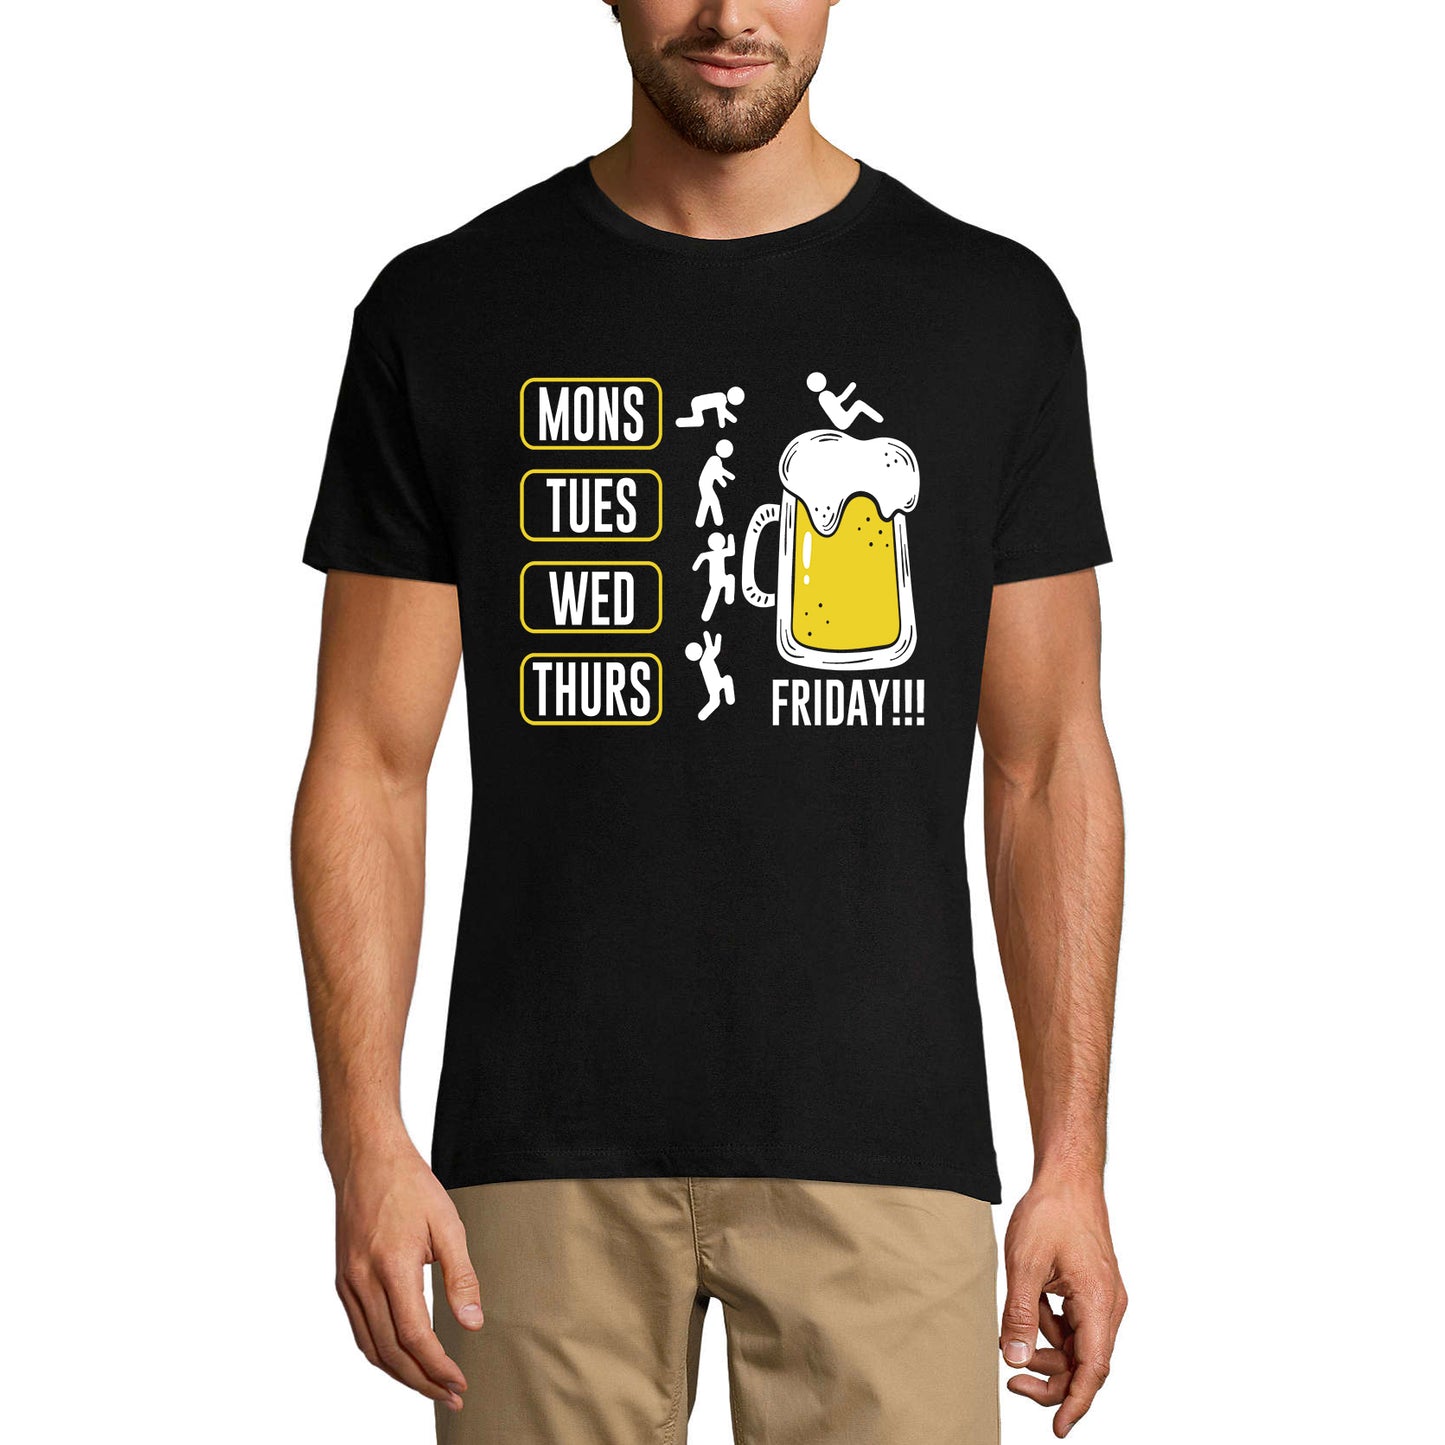 ULTRABASIC Men's Novelty T-Shirt Every Day Beer Lover Funny Tee Shirt